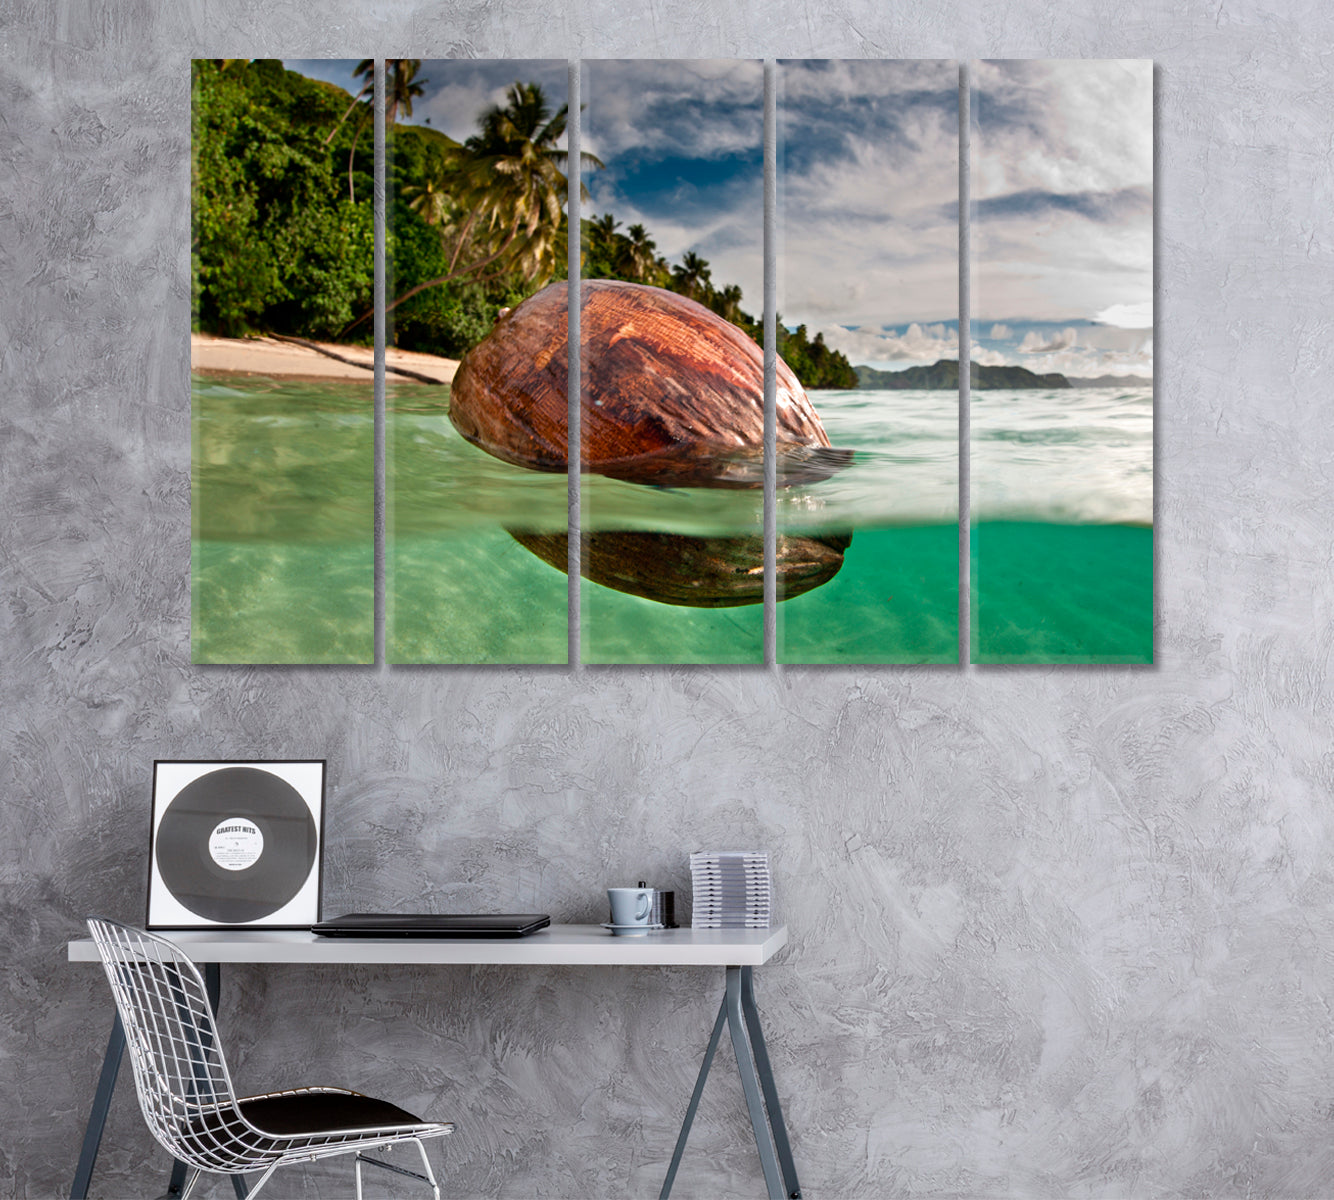 Coconut in Ocean near Beach Kadavu Island Fiji Canvas Print ArtLexy 5 Panels 36"x24" inches 